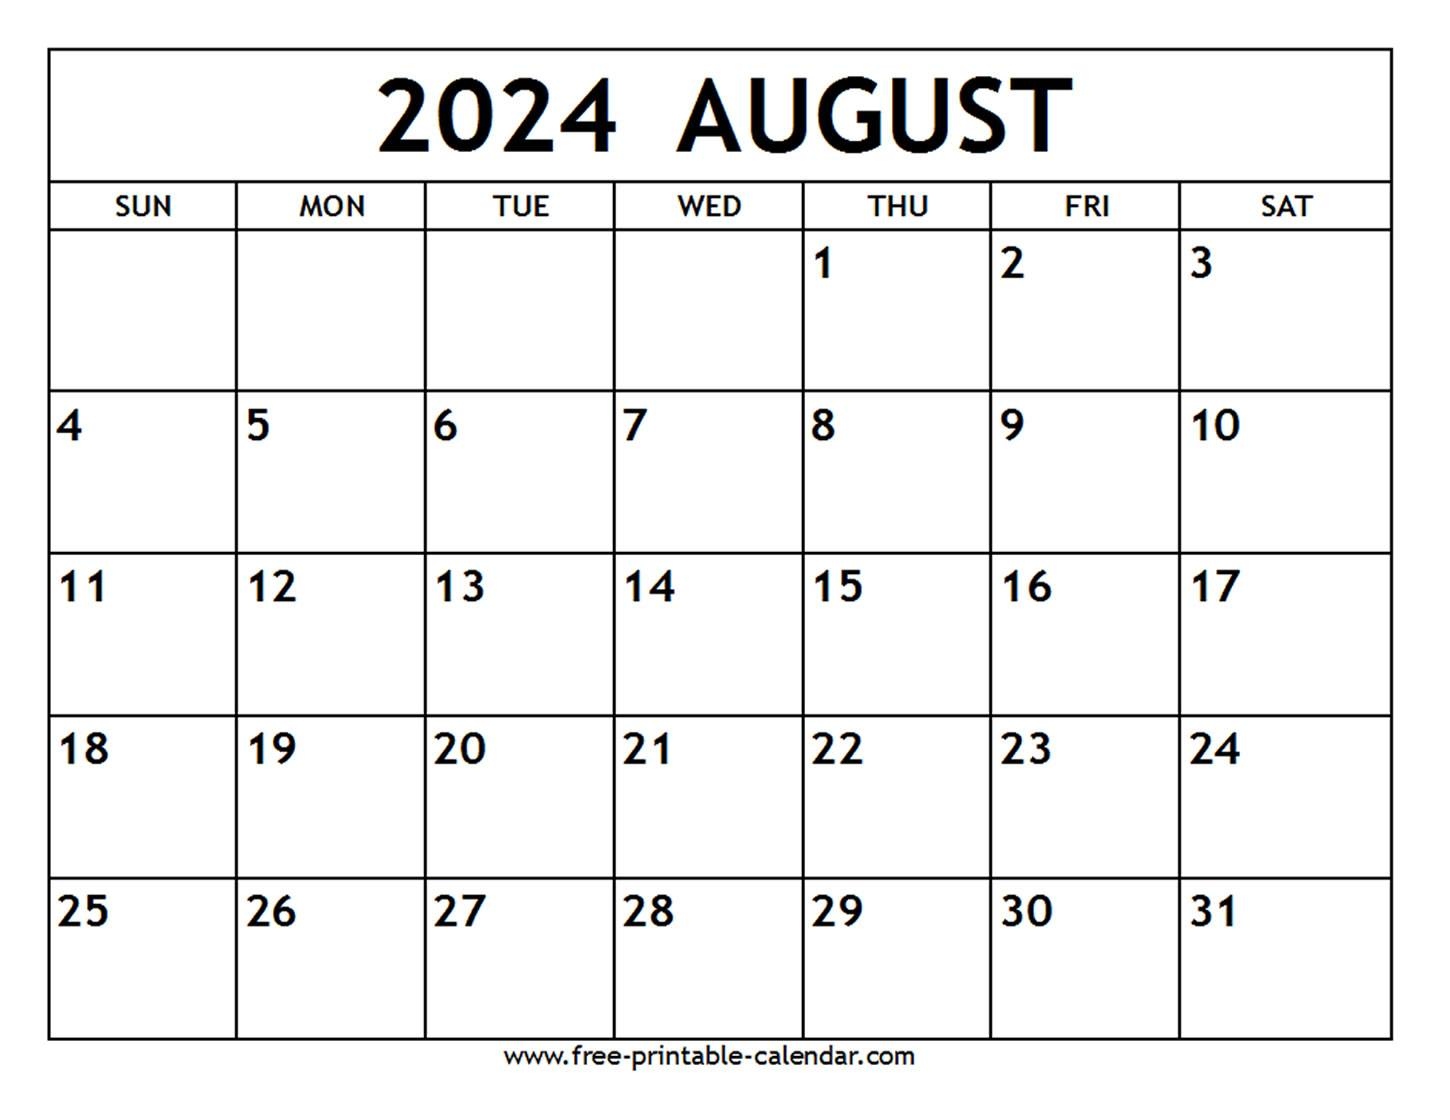 August 2024 Calendar - Free-Printable-Calendar within Free Printable August 2024 Calender